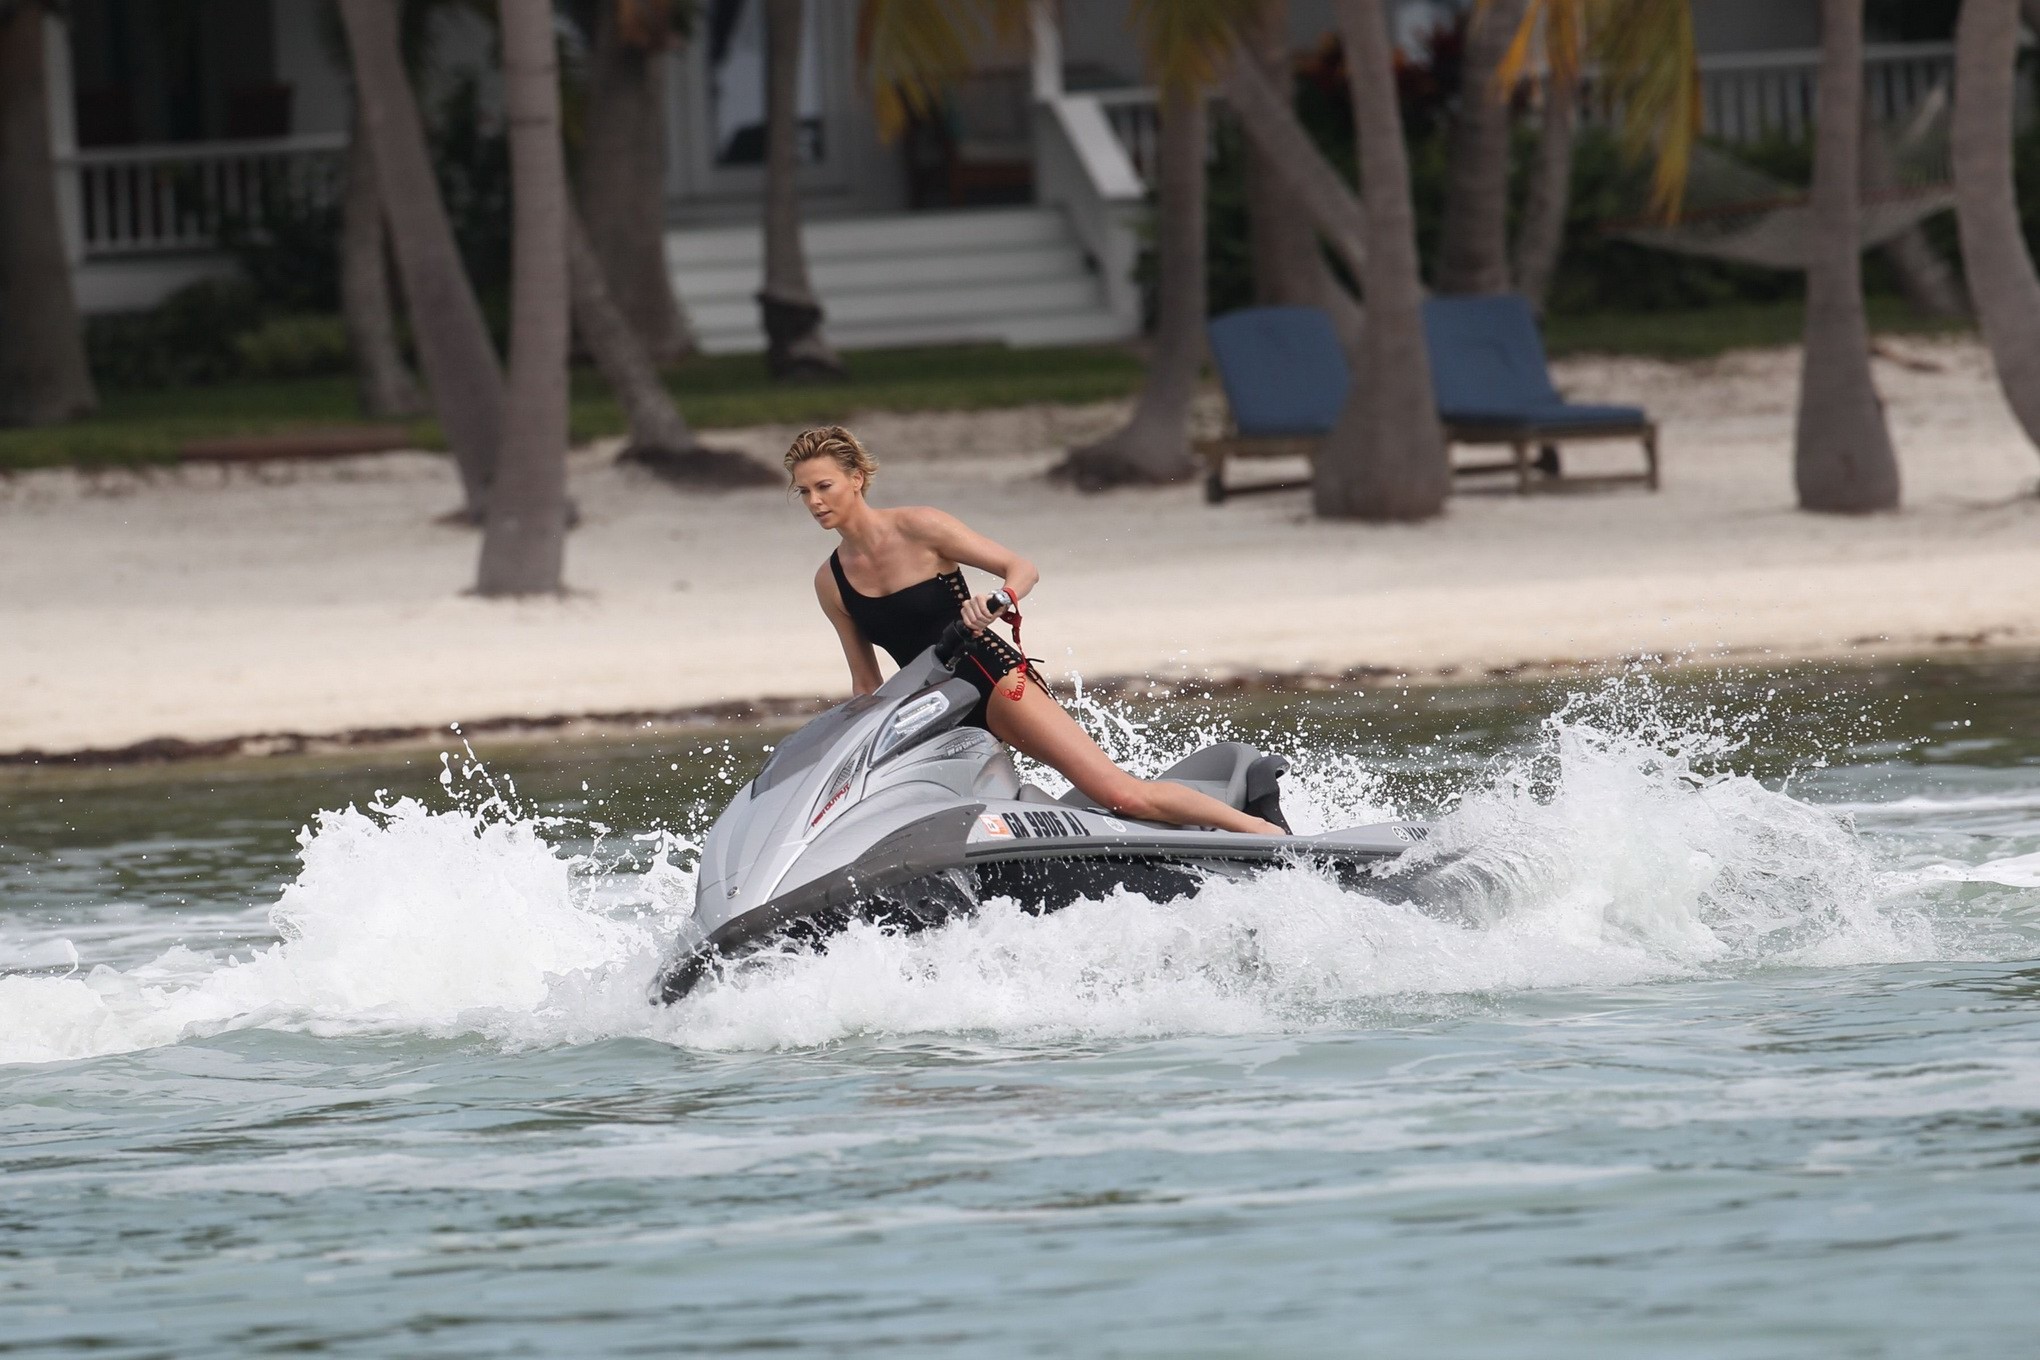 Charlize theron jet skiing in schwarzem monokini während des photoshoot in miami beac
 #75201237